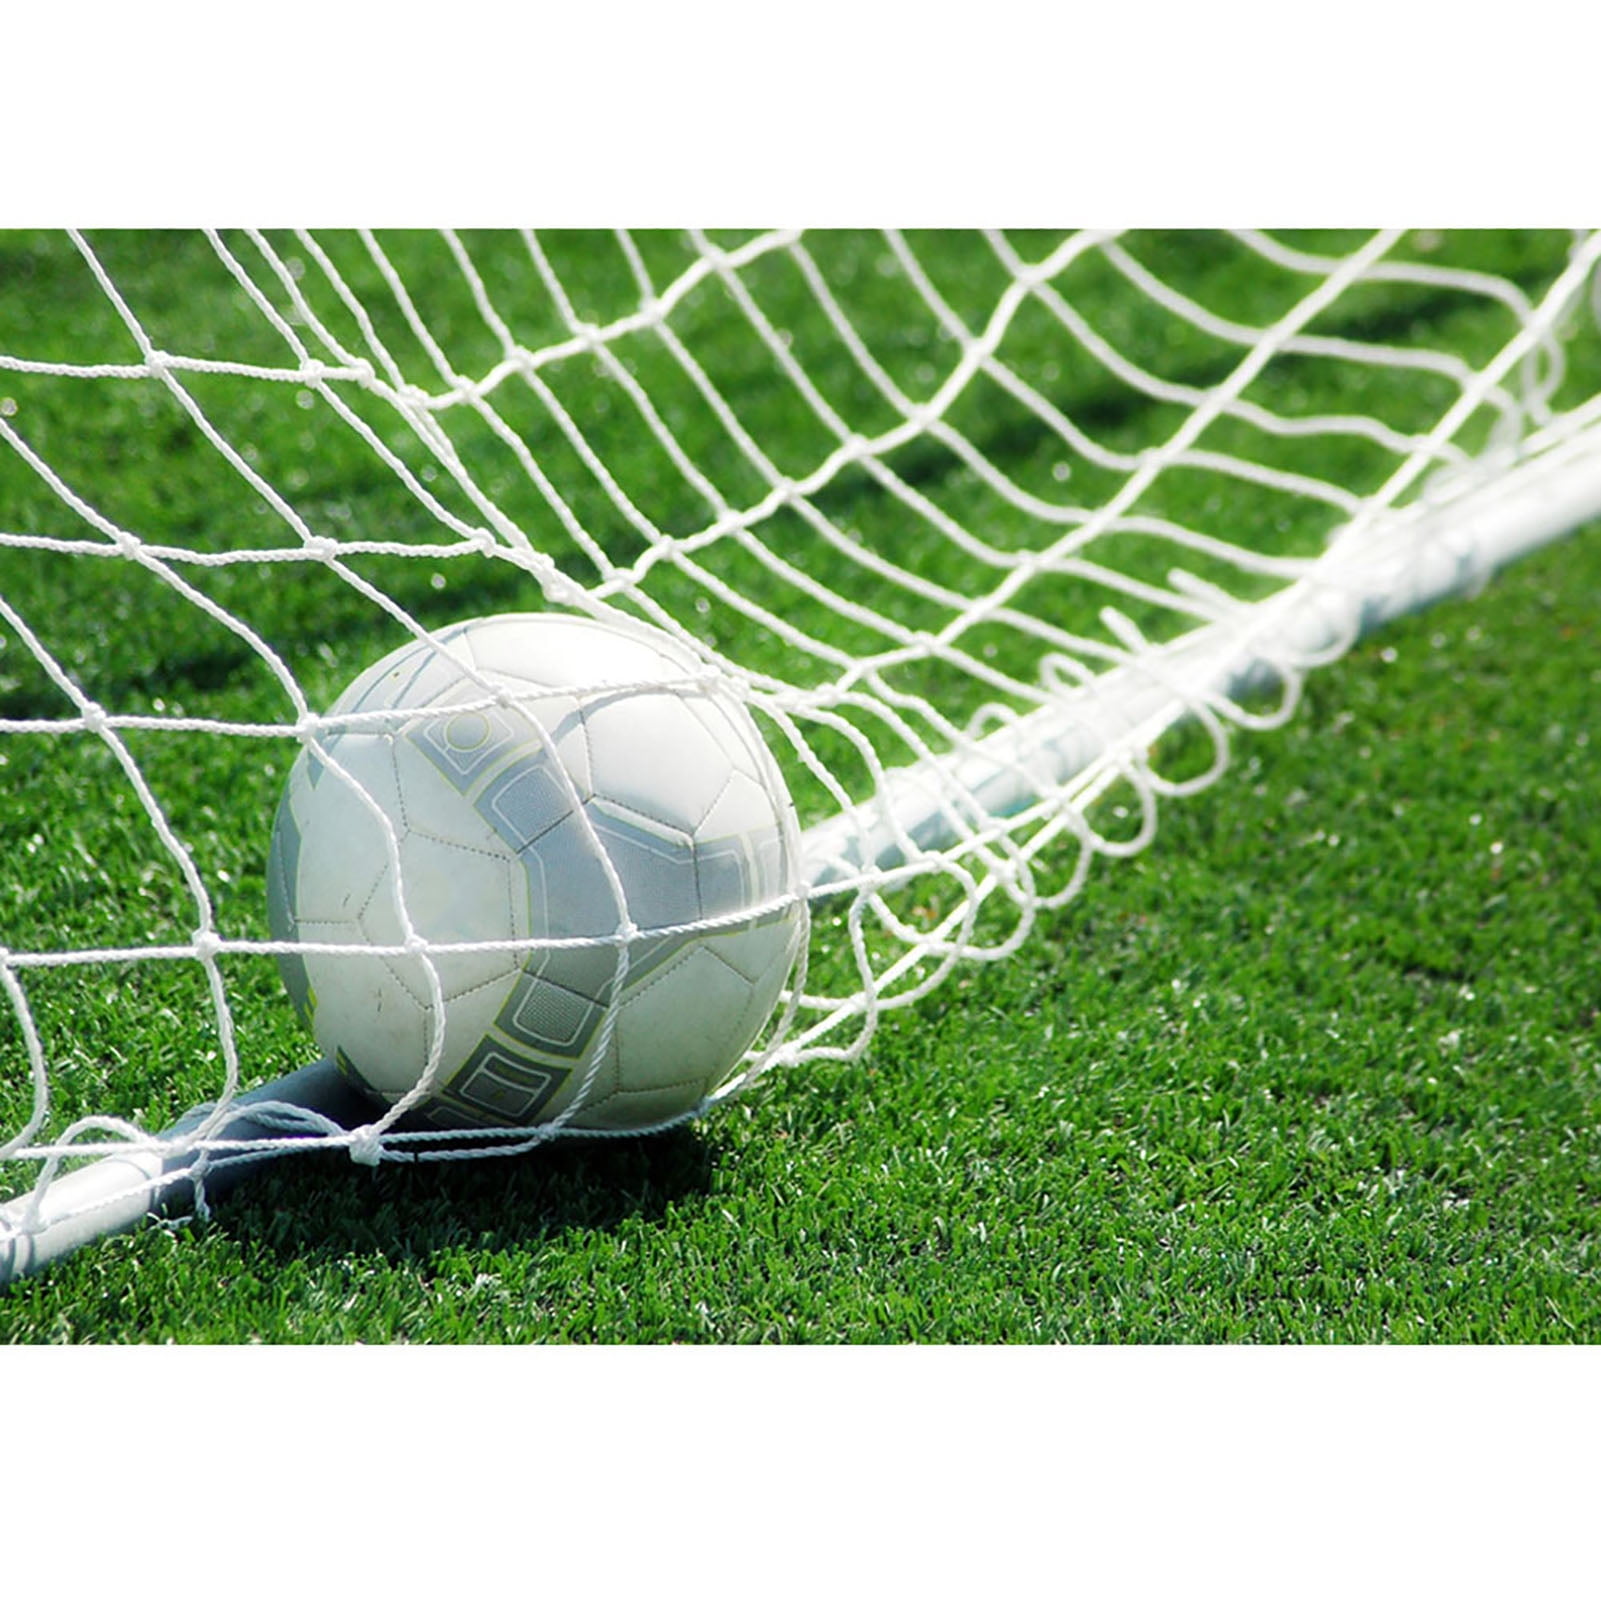 Football Net Sports Replacement Soccer Goal Post Net for Sports Match Training 